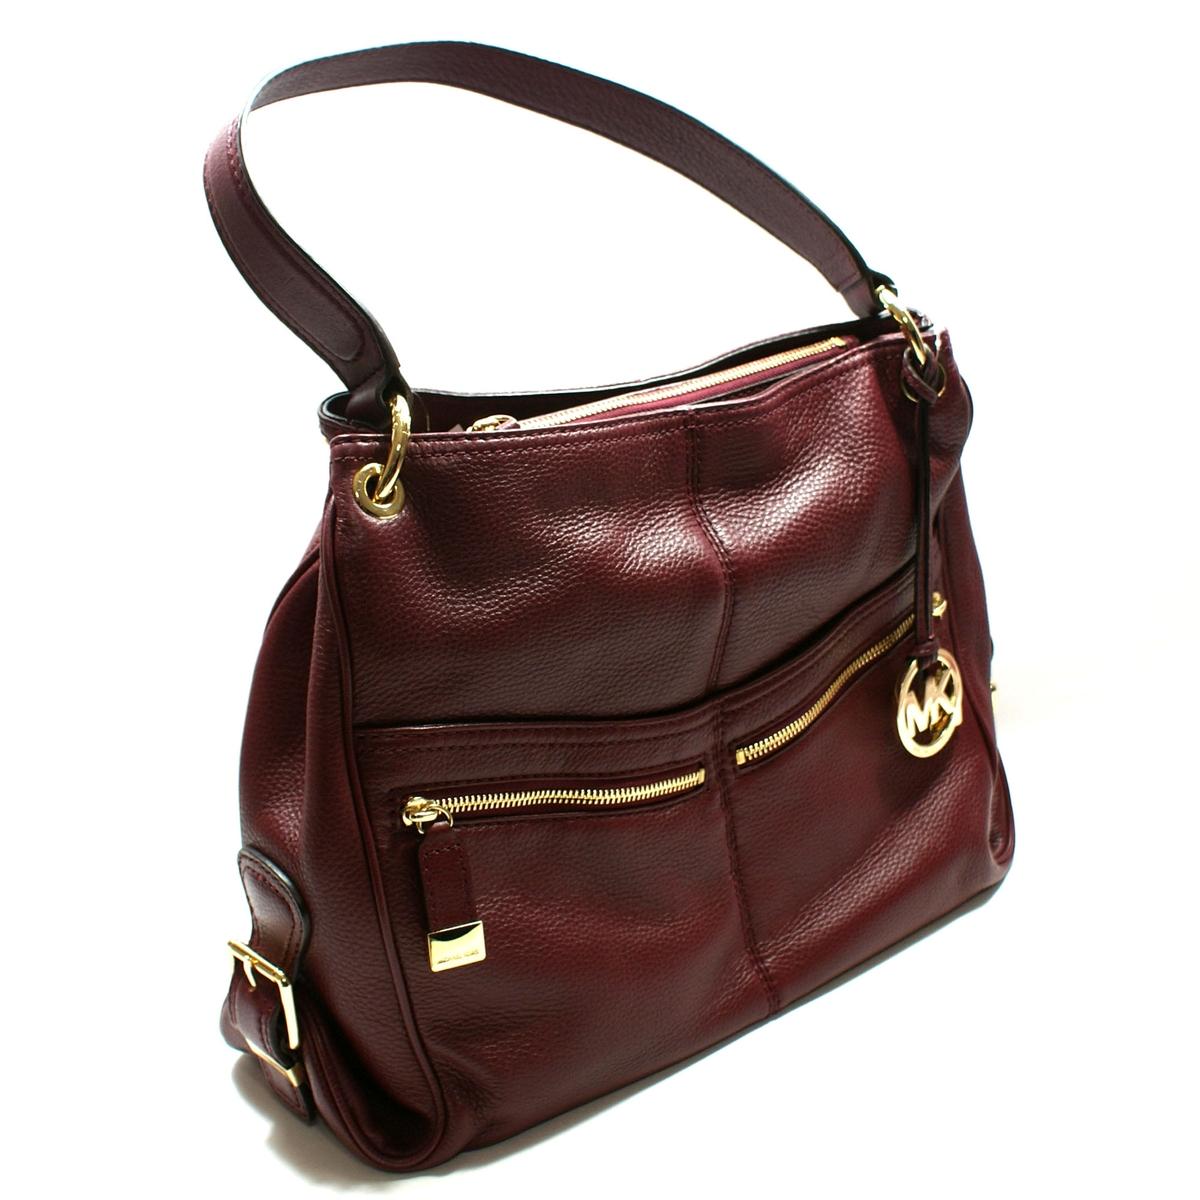 Large Shoulder Handbags. UTO Women Handbags Hobo Shoulder Bags Tote PU Leather Handbags Fashion ...